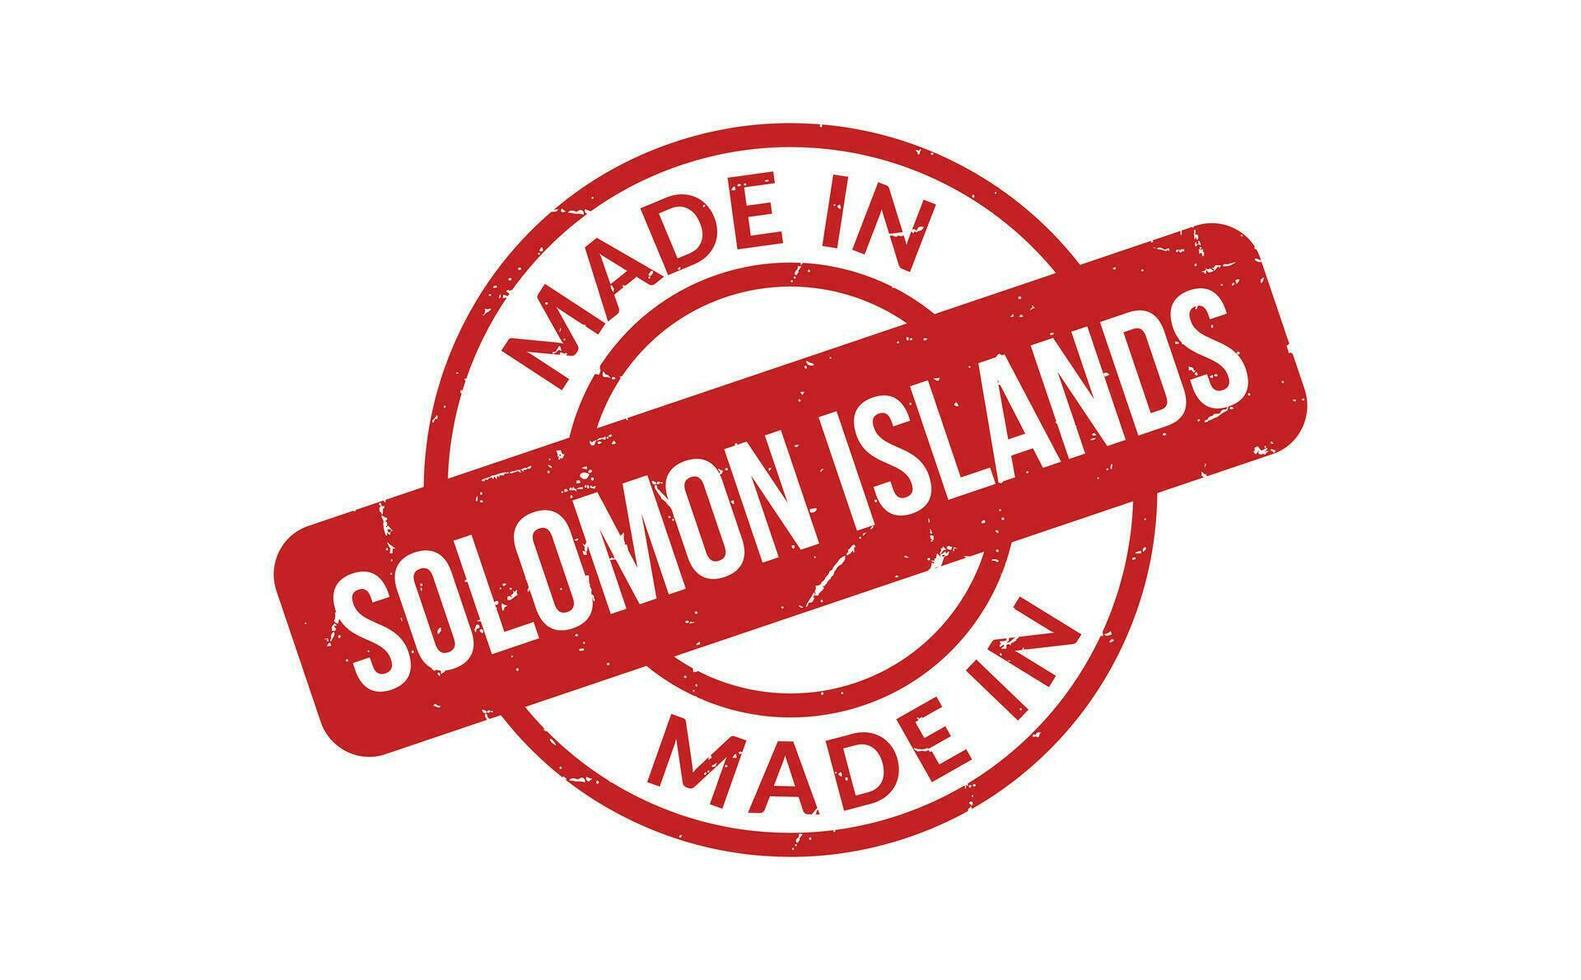 Made In Solomon Islands Rubber Stamp vector